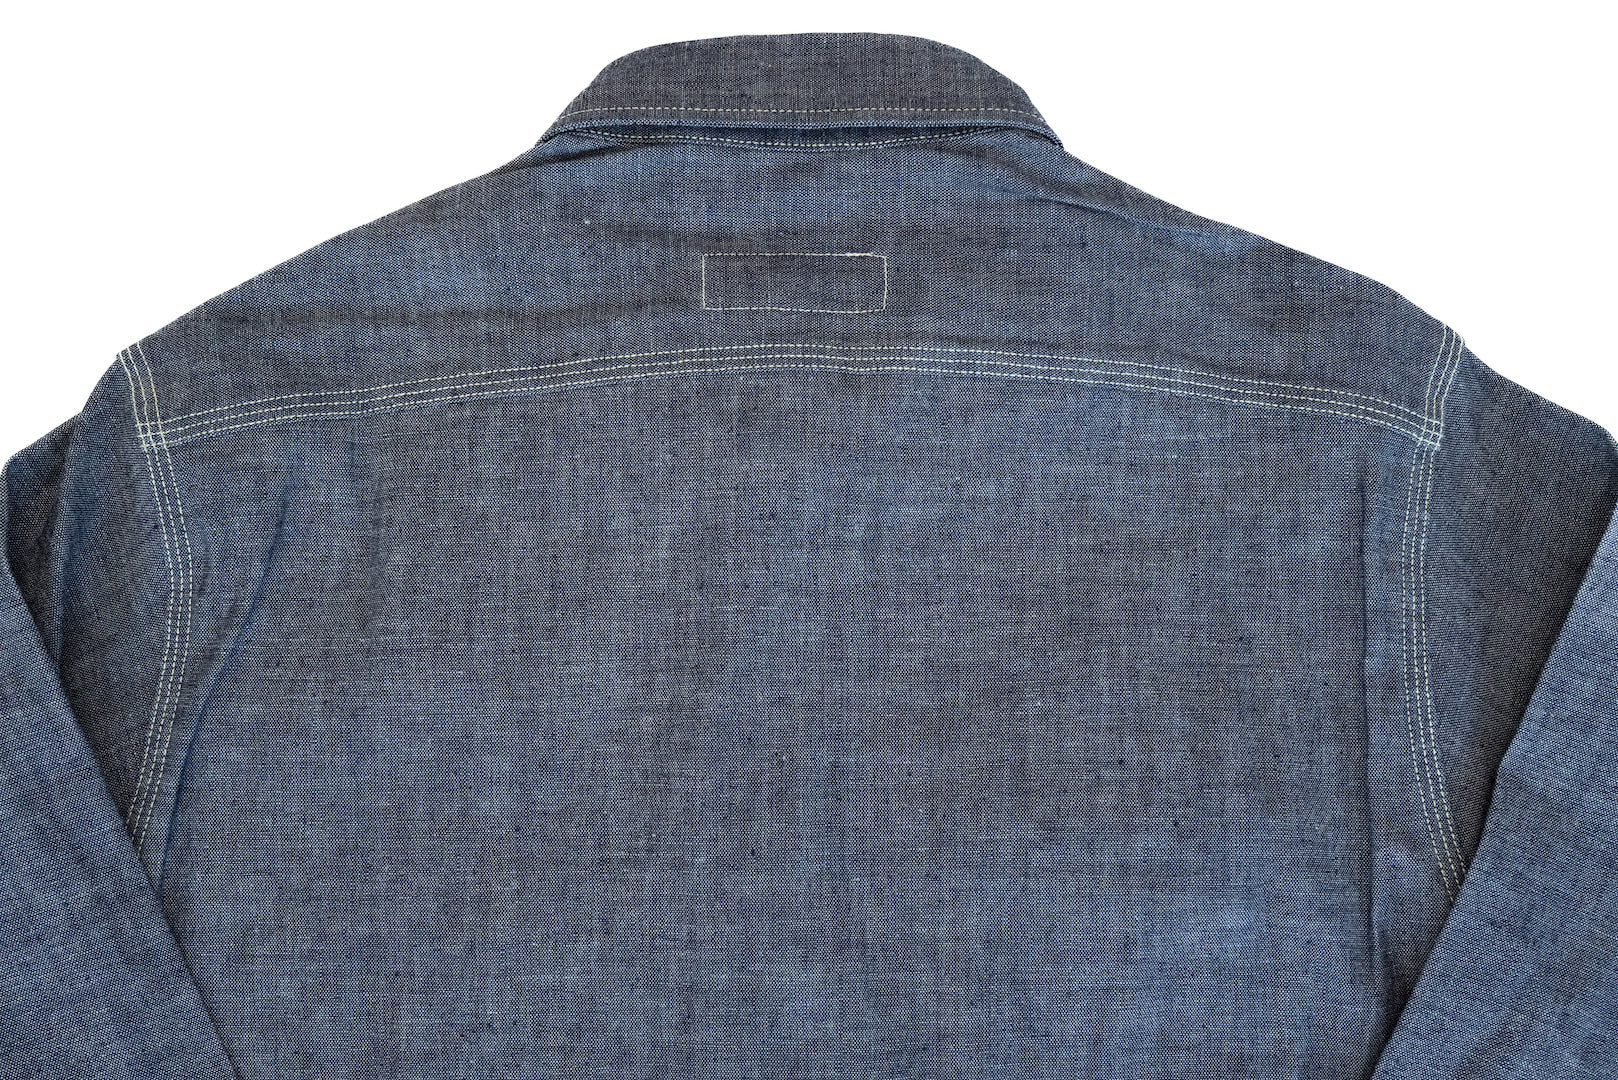 Unique Garment 9oz 'Stanley' Selvage Chambray Work Shirt (Indigo)